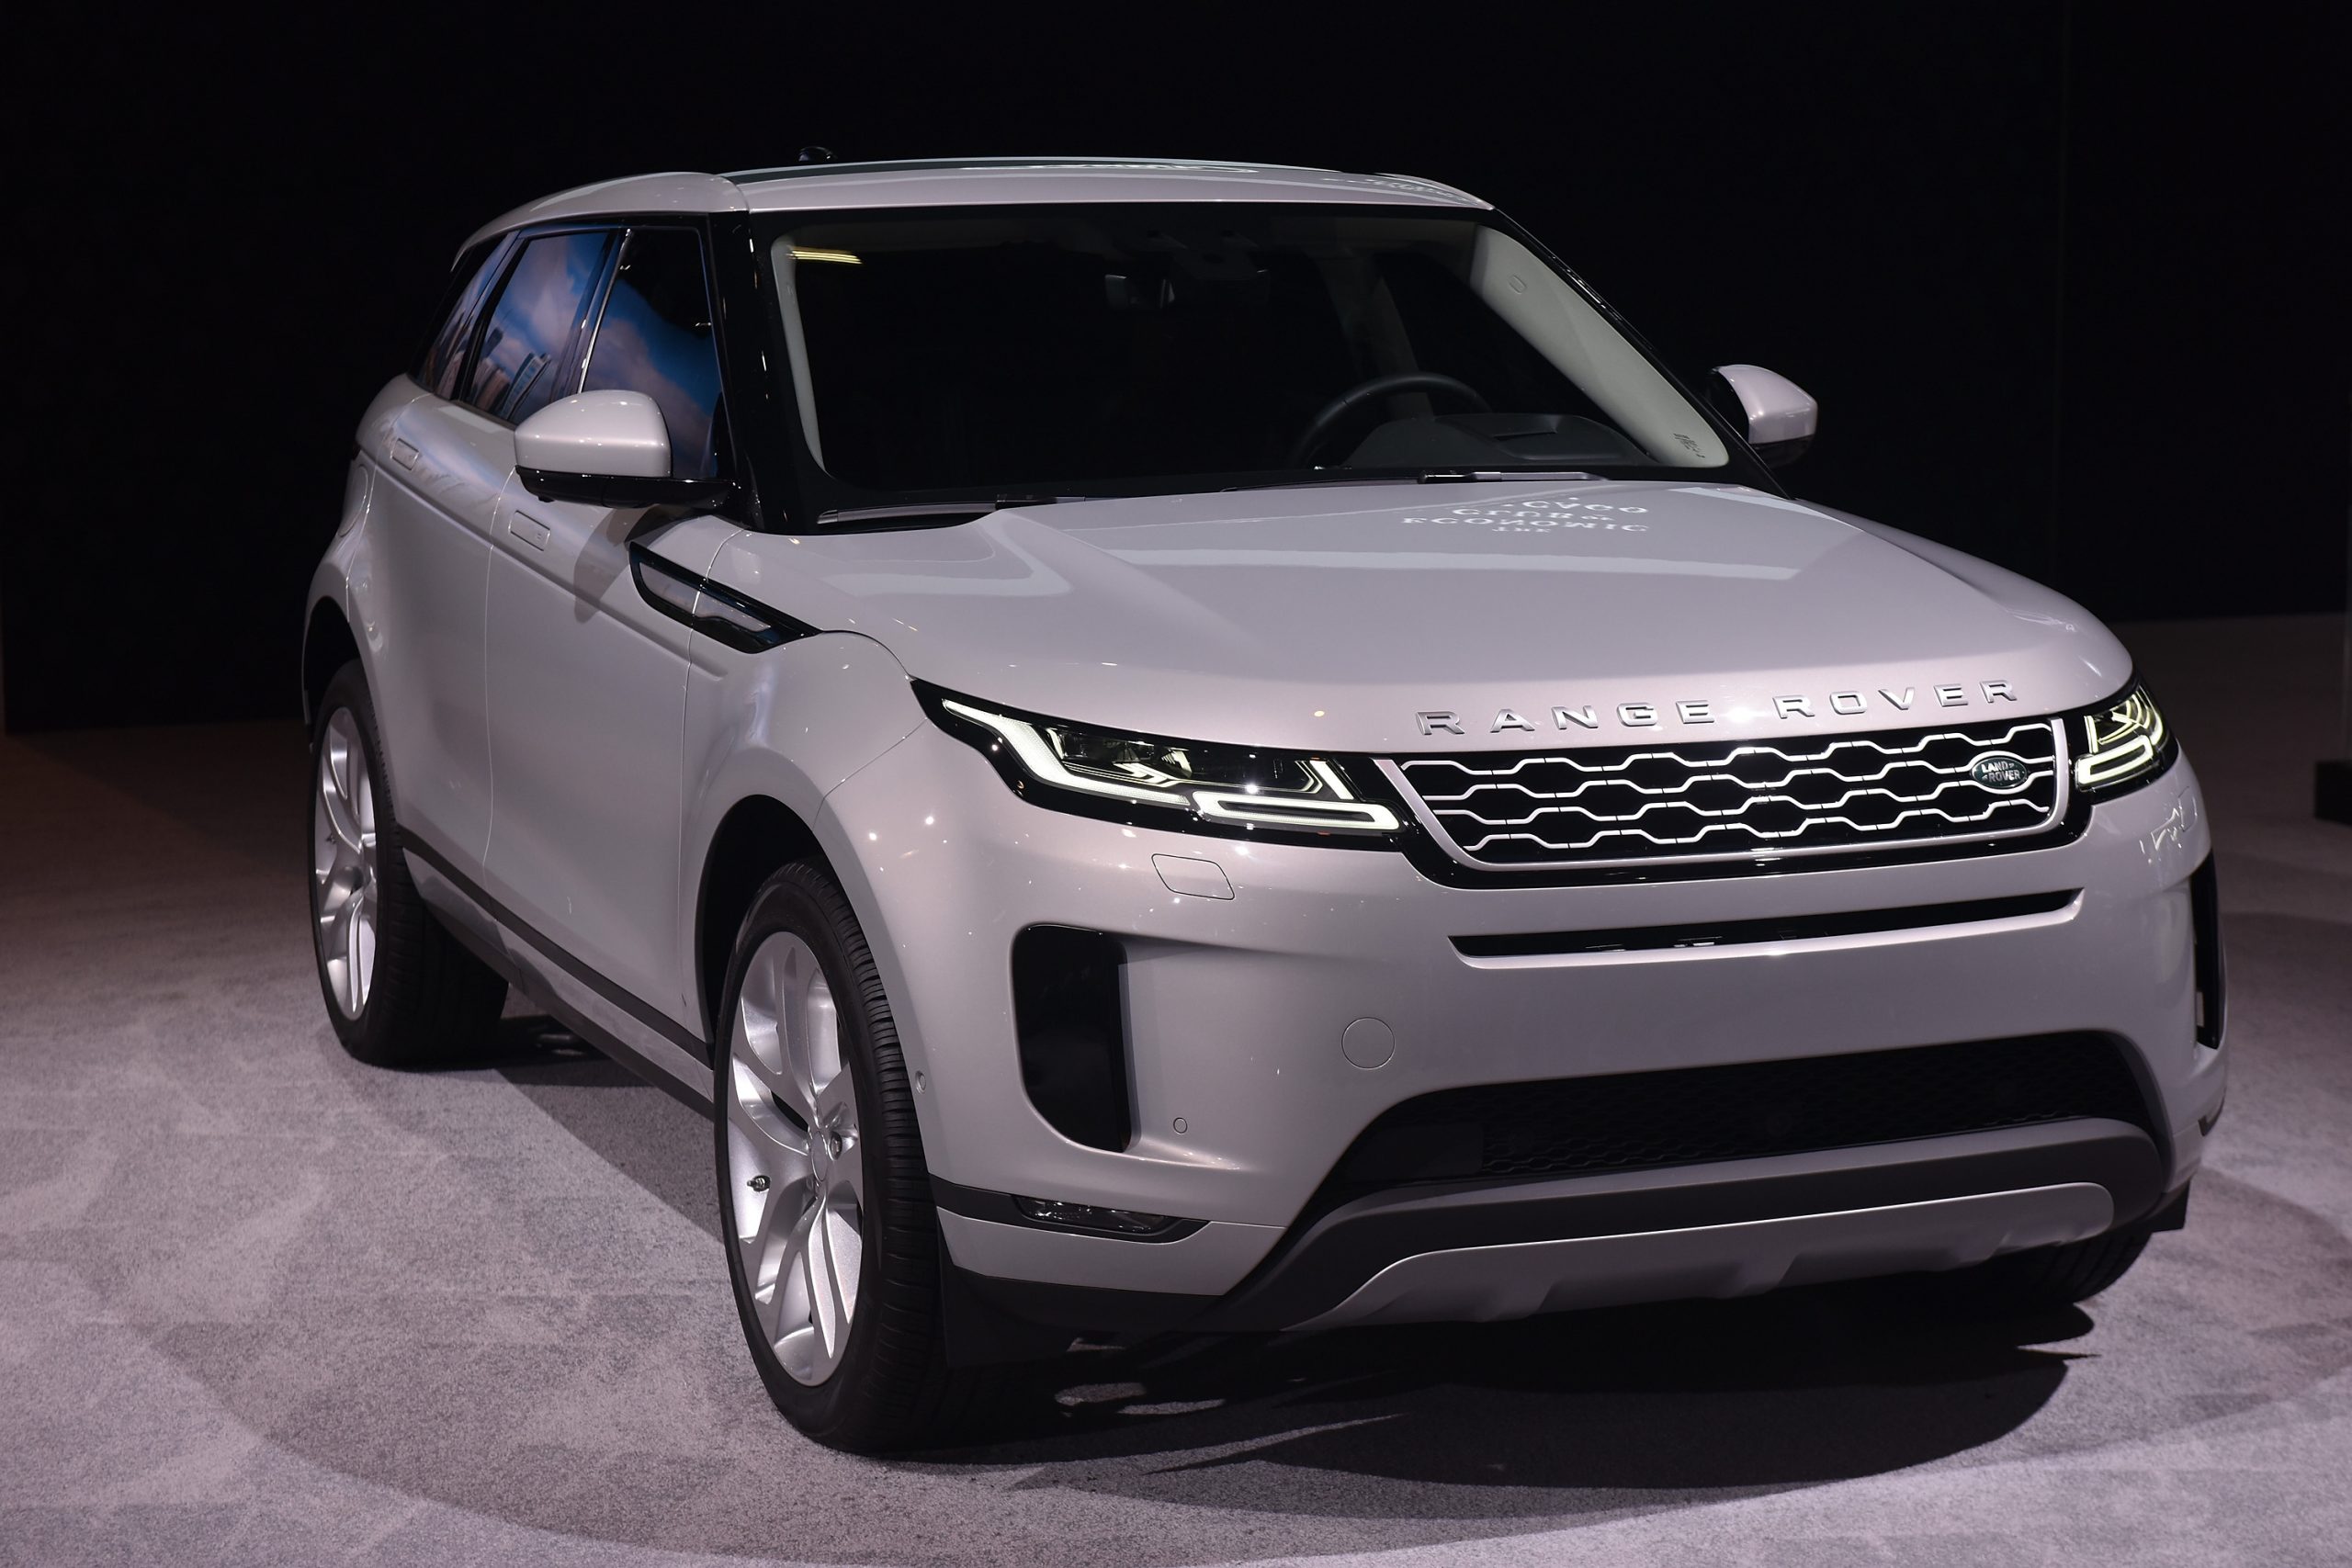 Range Rover Evoque/Foto: Getty Images